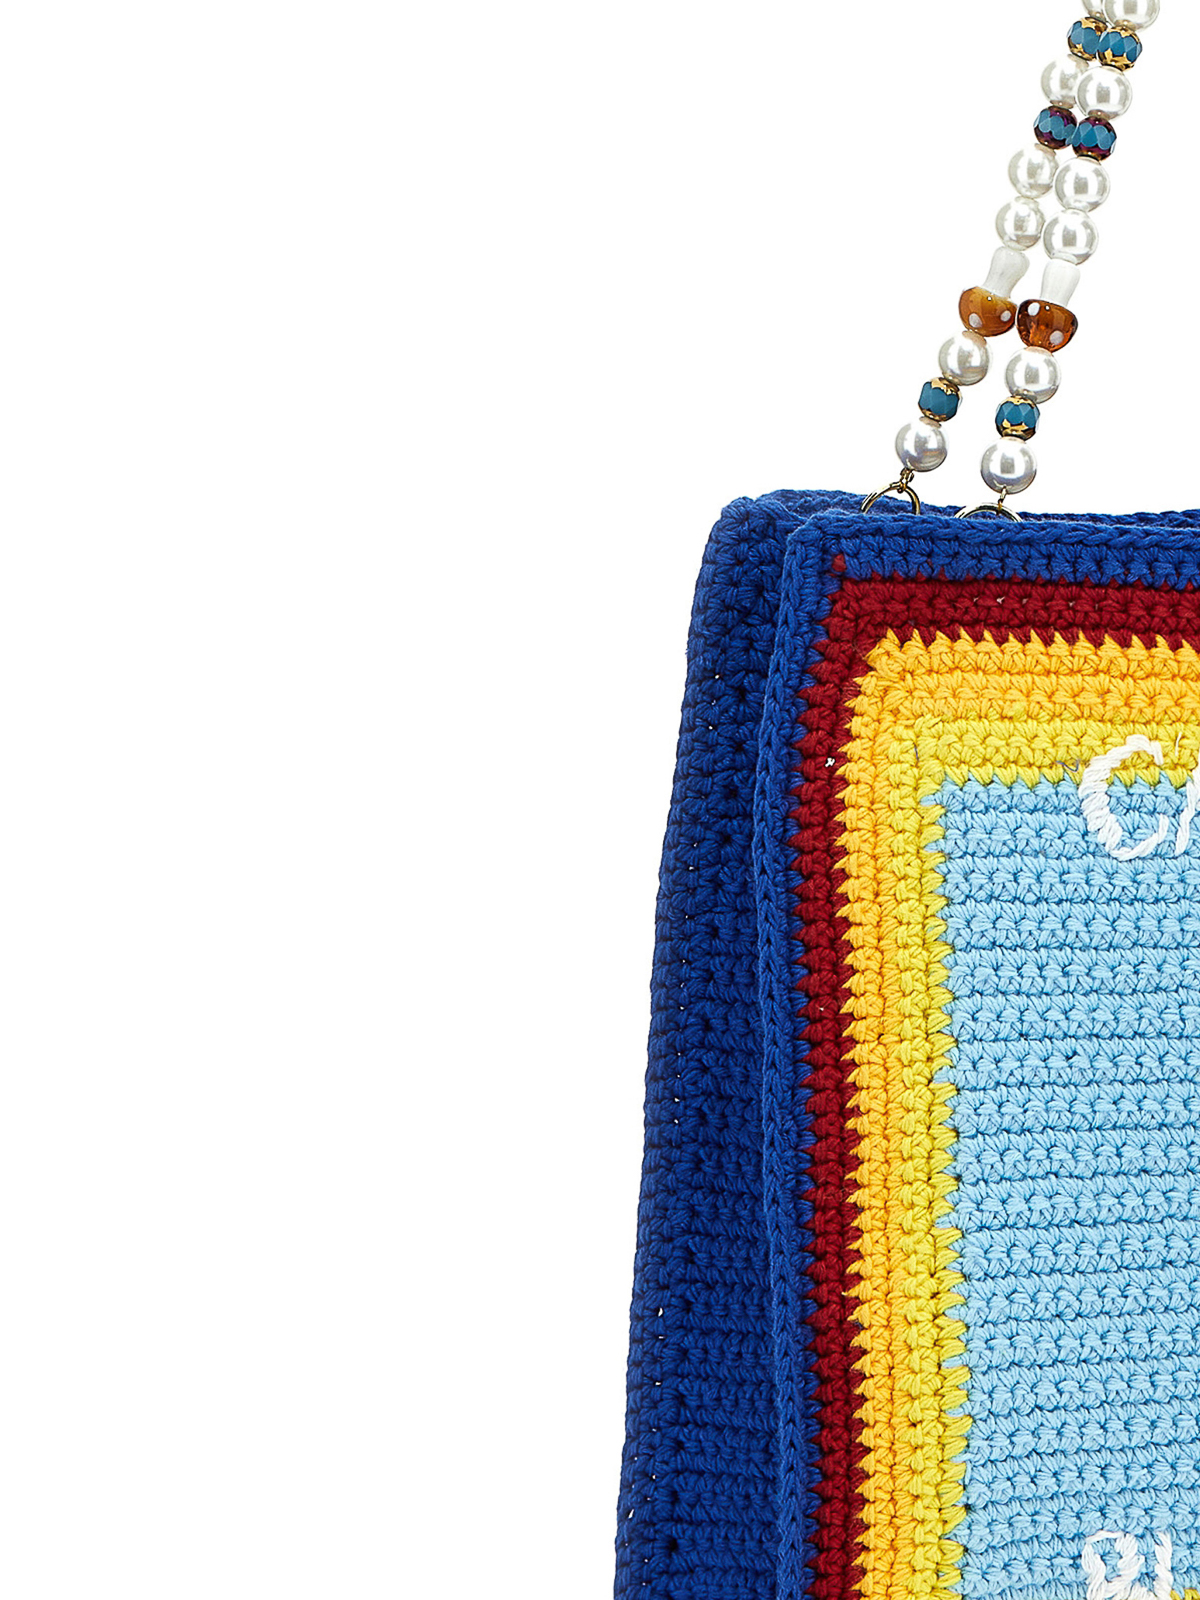 Tory Burch Ella Logo-embroidered Crochet Tote Bag